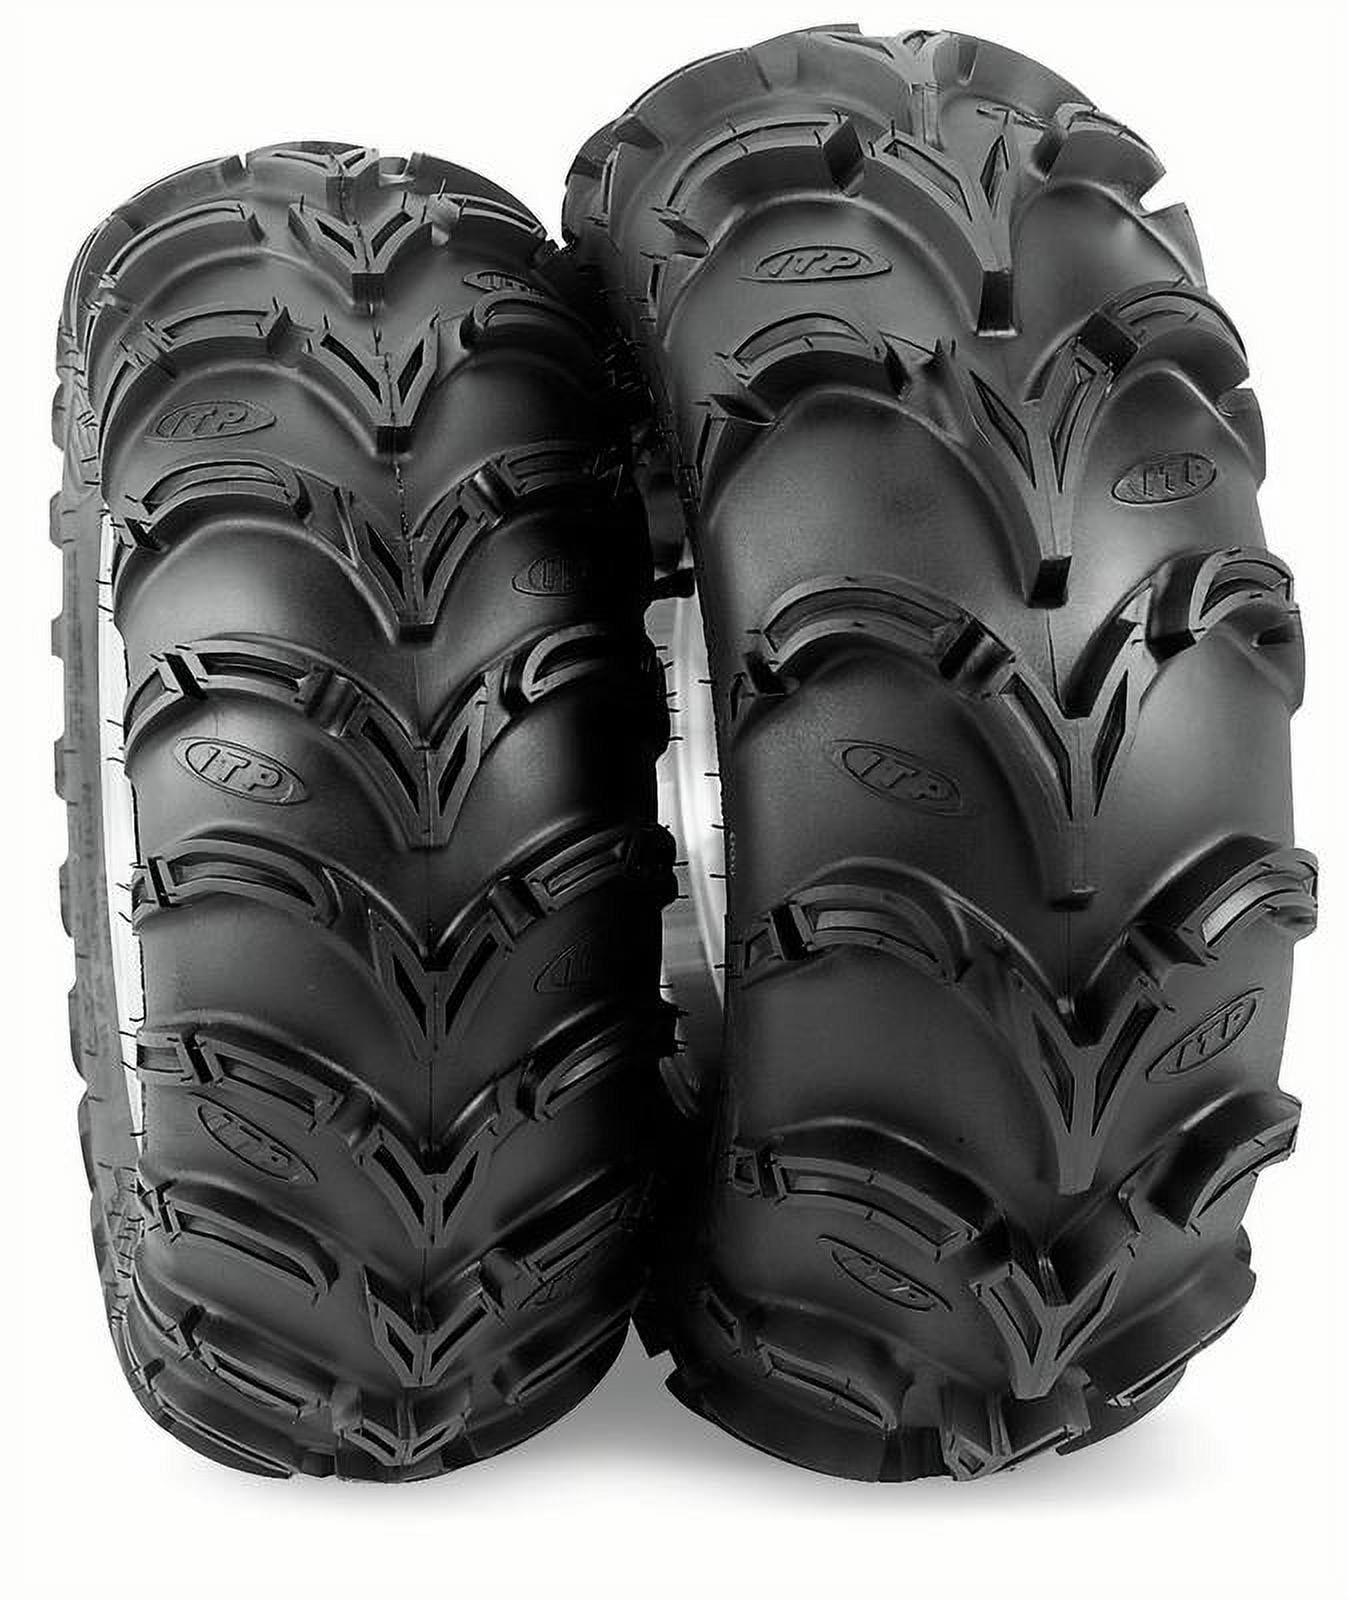 2 Pair of ITP Mud Lite XL 6ply ATV Tires 27x9-12 